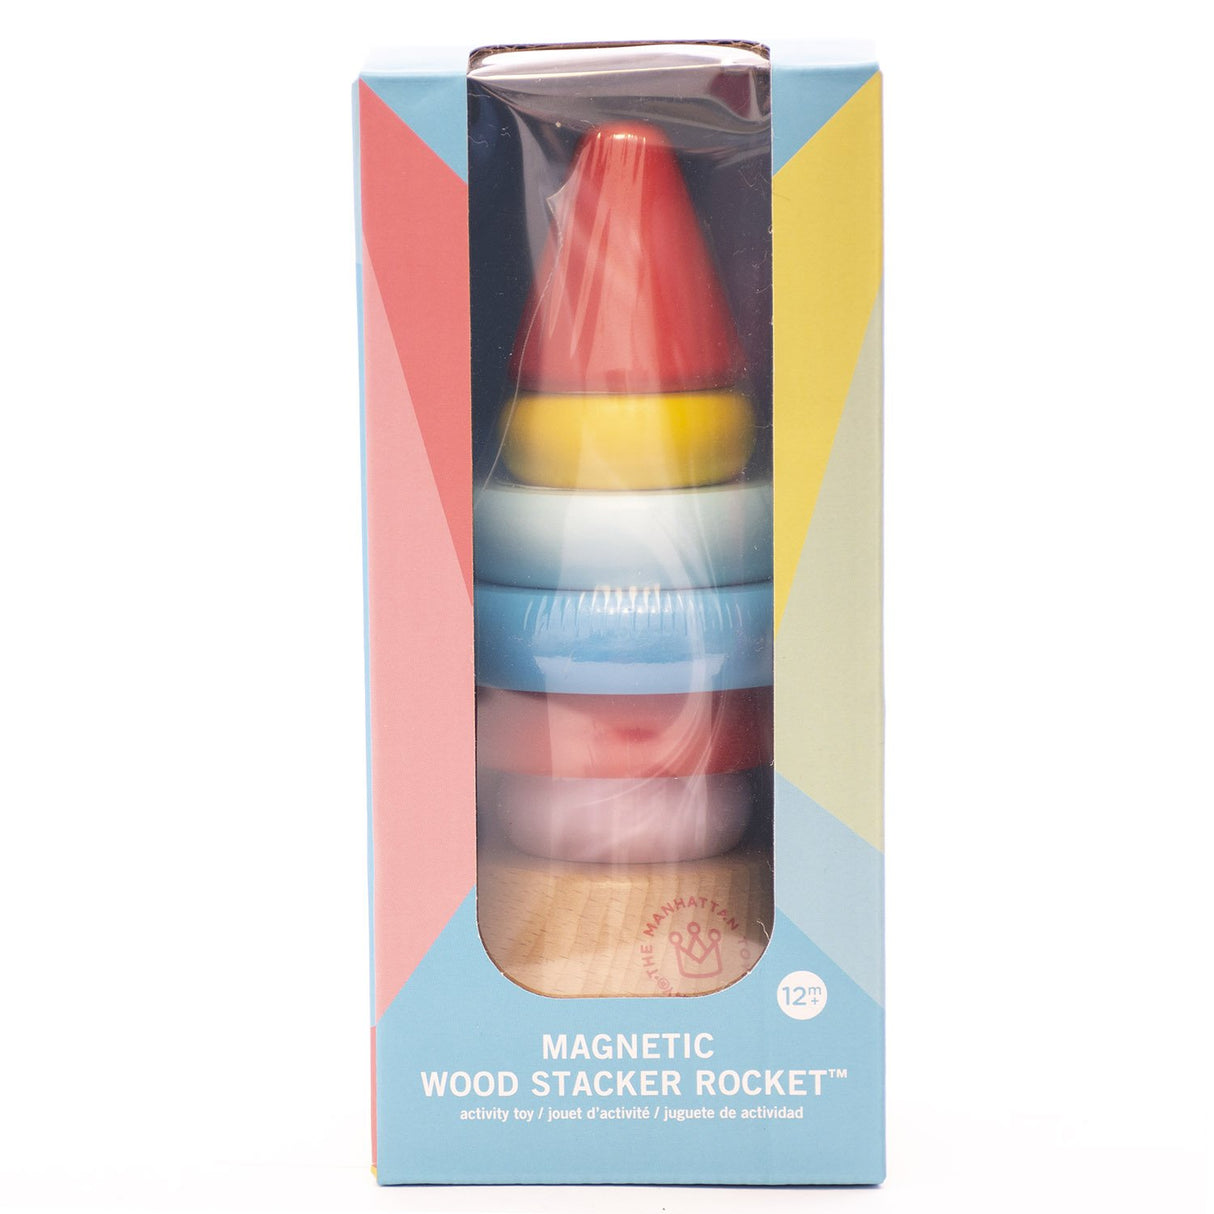 Magnetic Wood Stacker Rocket - Manhattan Toy